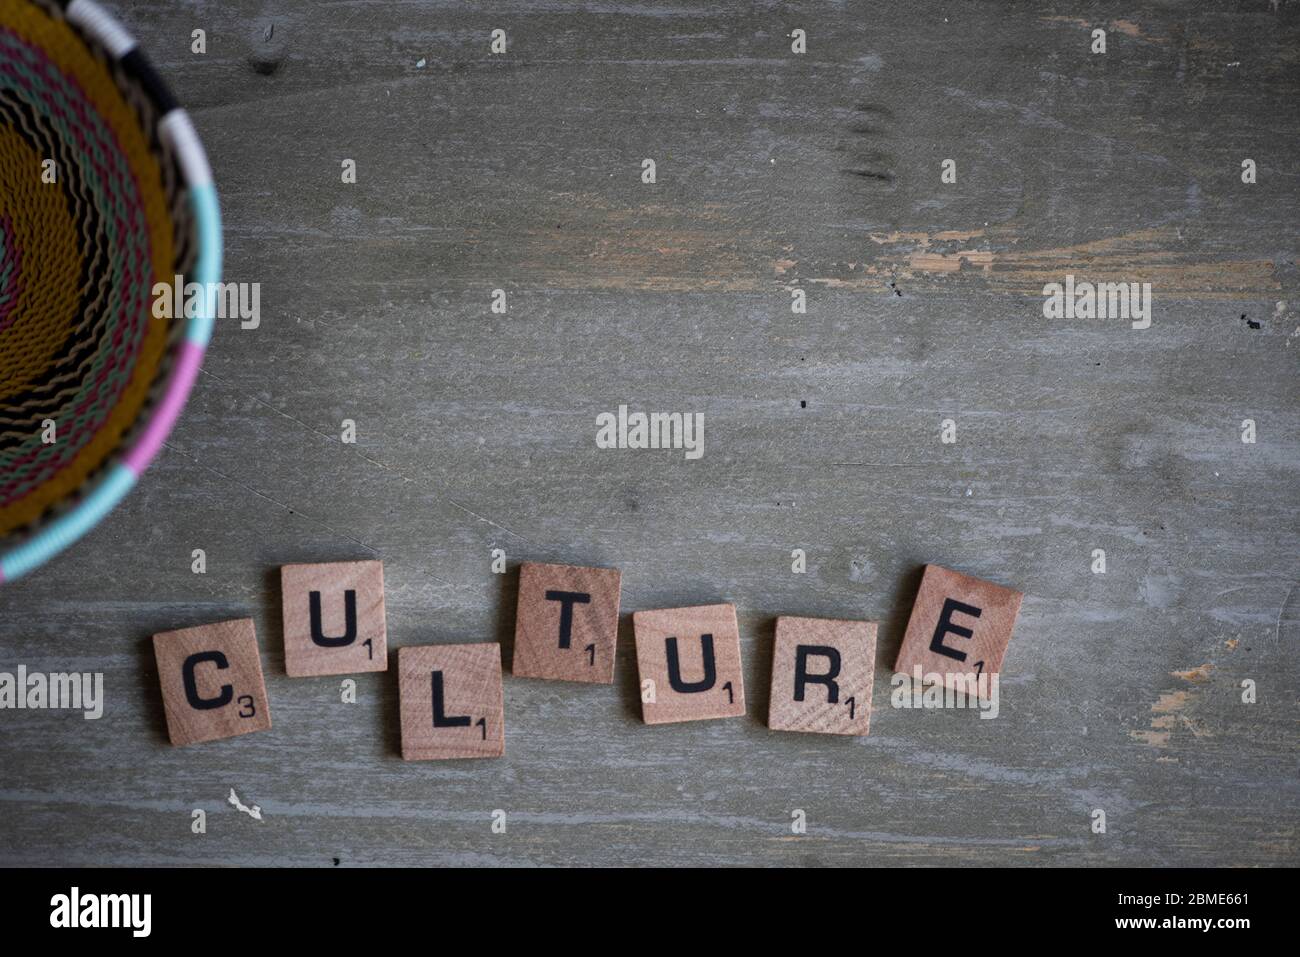 Kultur in Blockbuchstaben Stockfoto